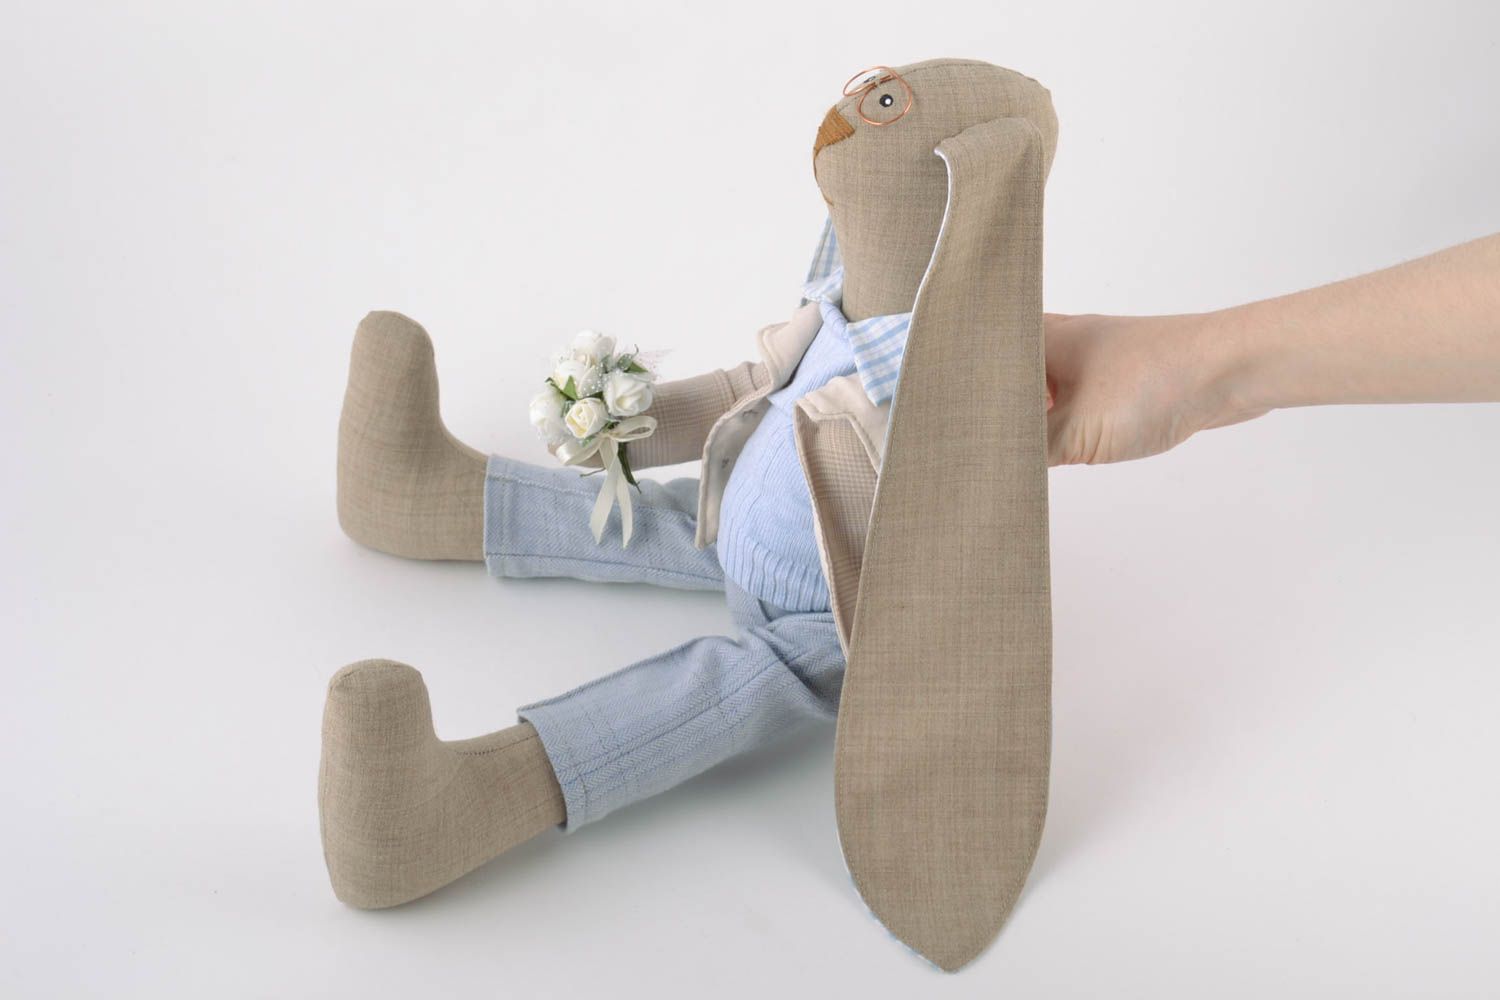 Handmade linen fabric soft toy rabbit gentleman in suit with flower bouquet photo 2